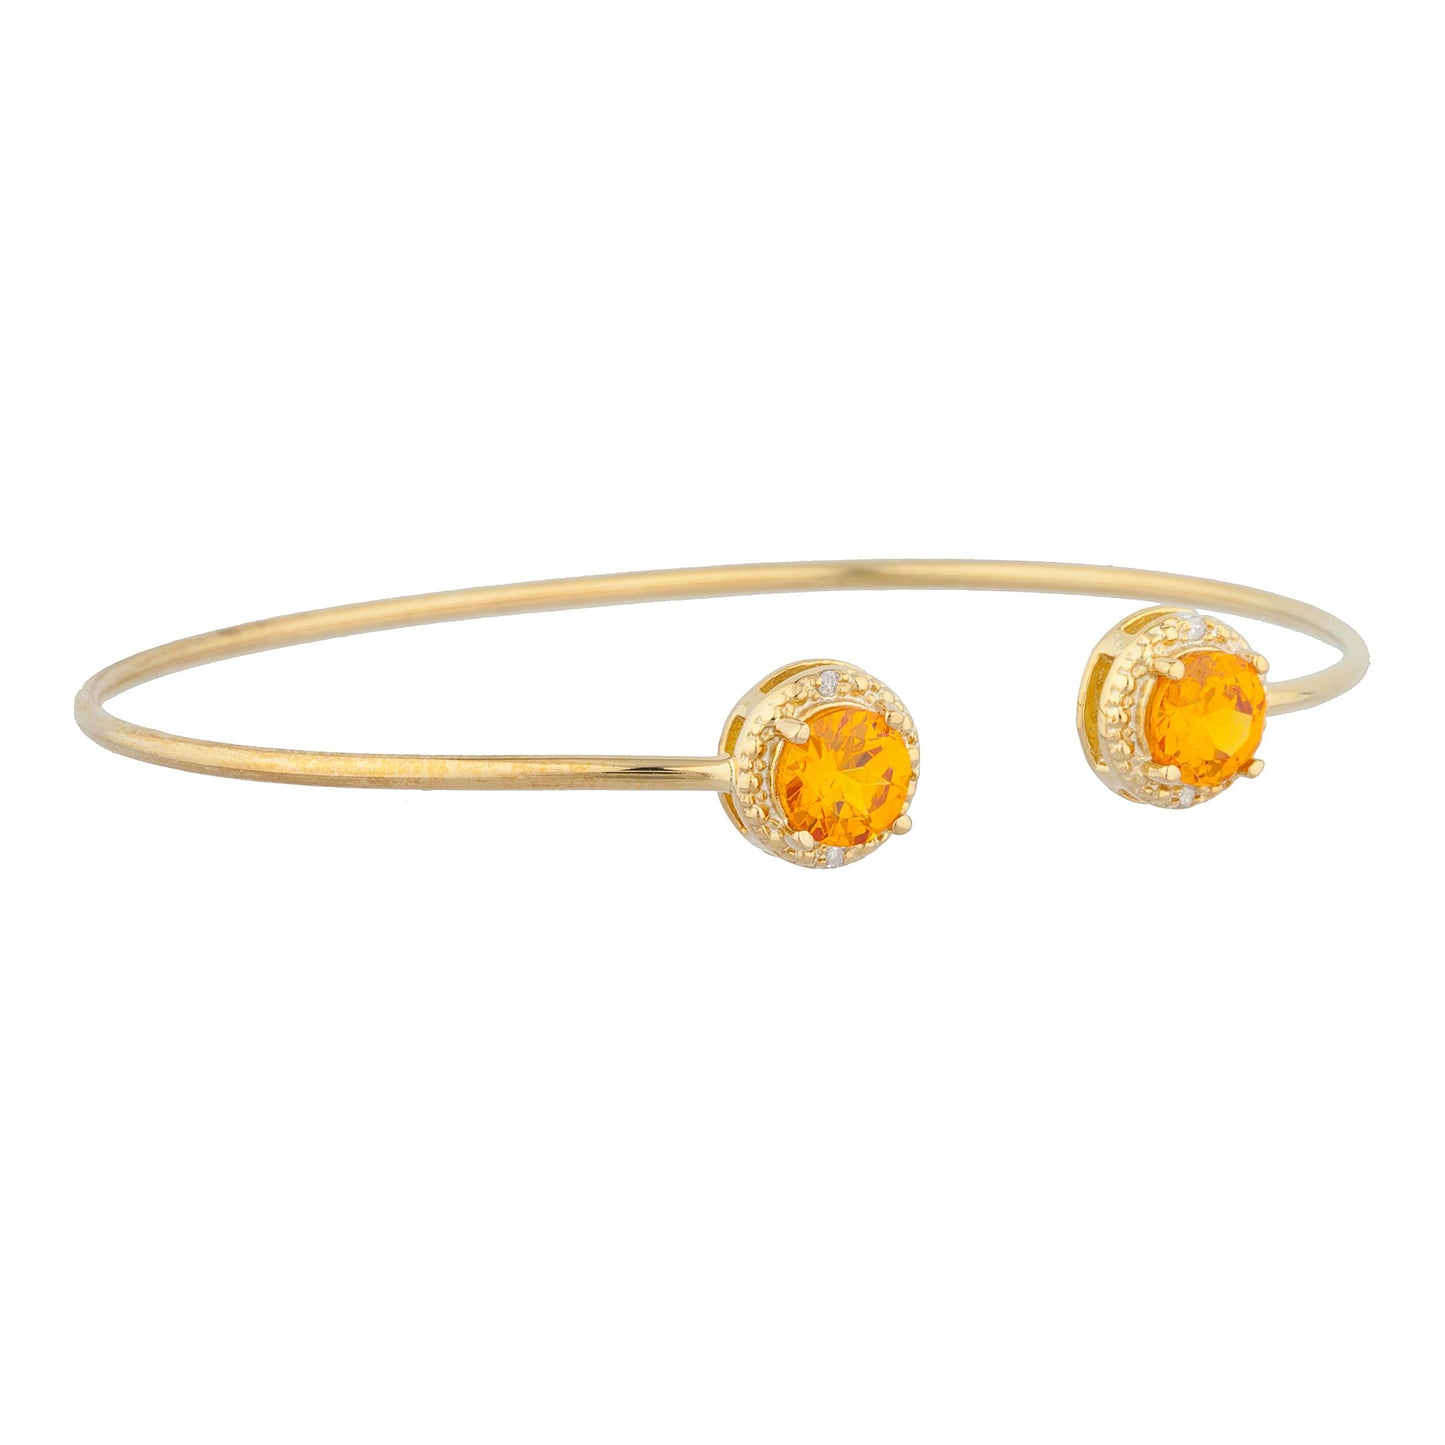 14Kt Gold Orange Citrine & Diamond Round Bangle Bracelet